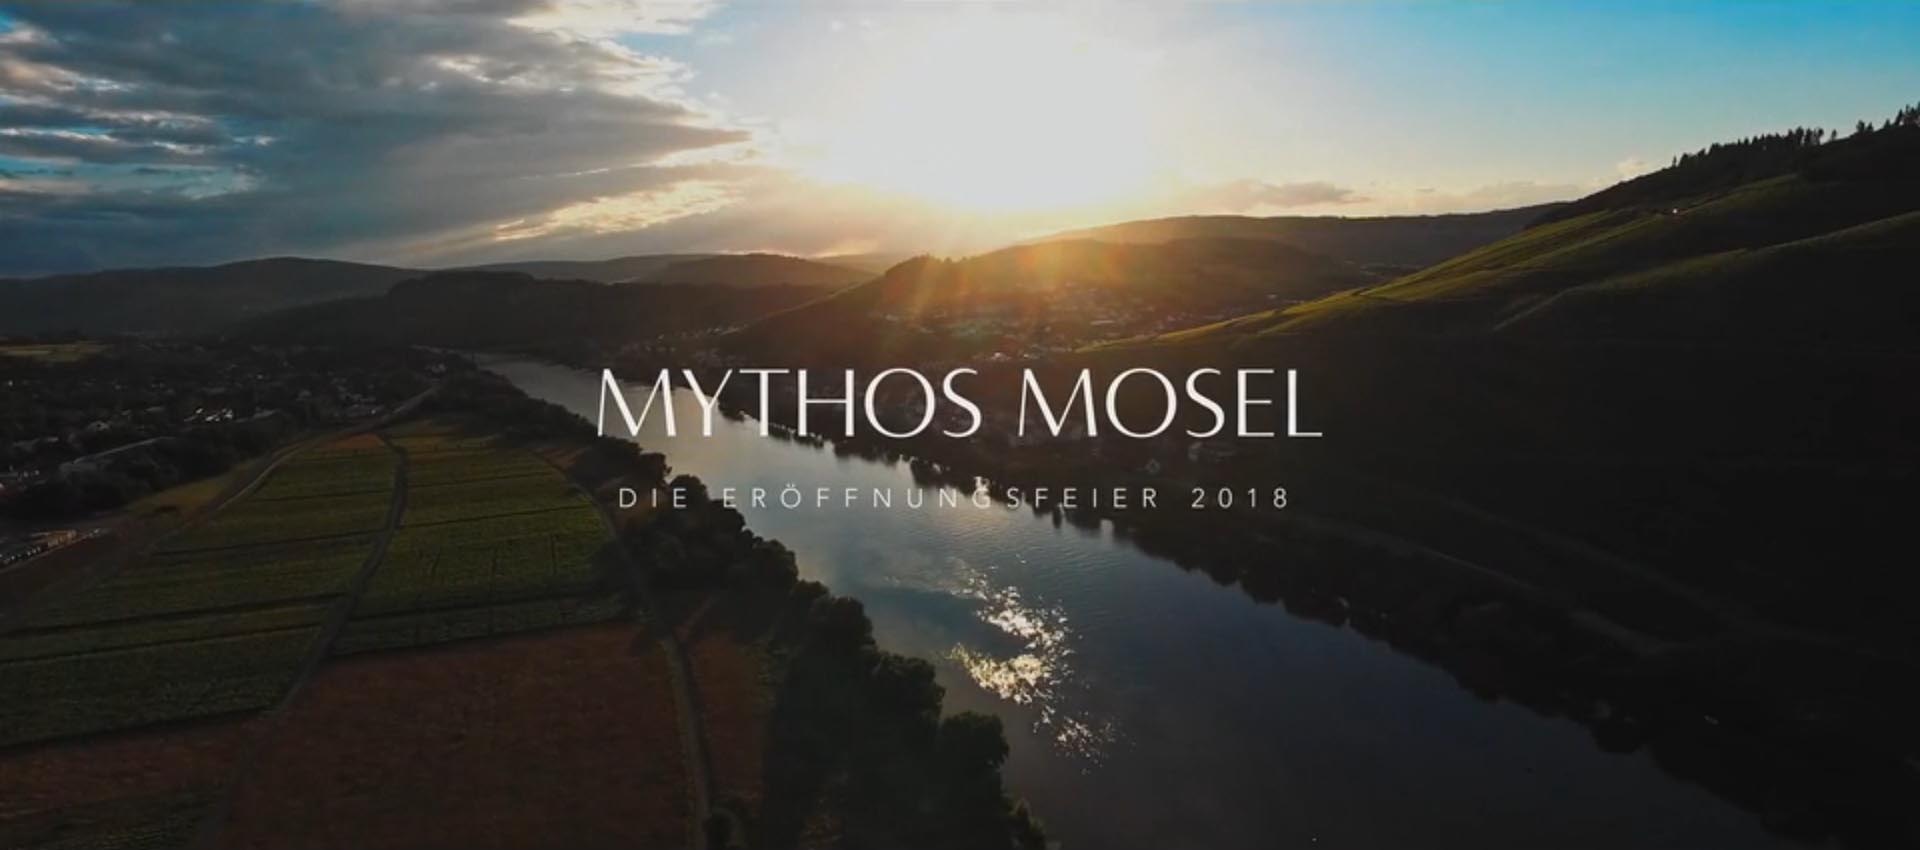 mythos mosel 2018